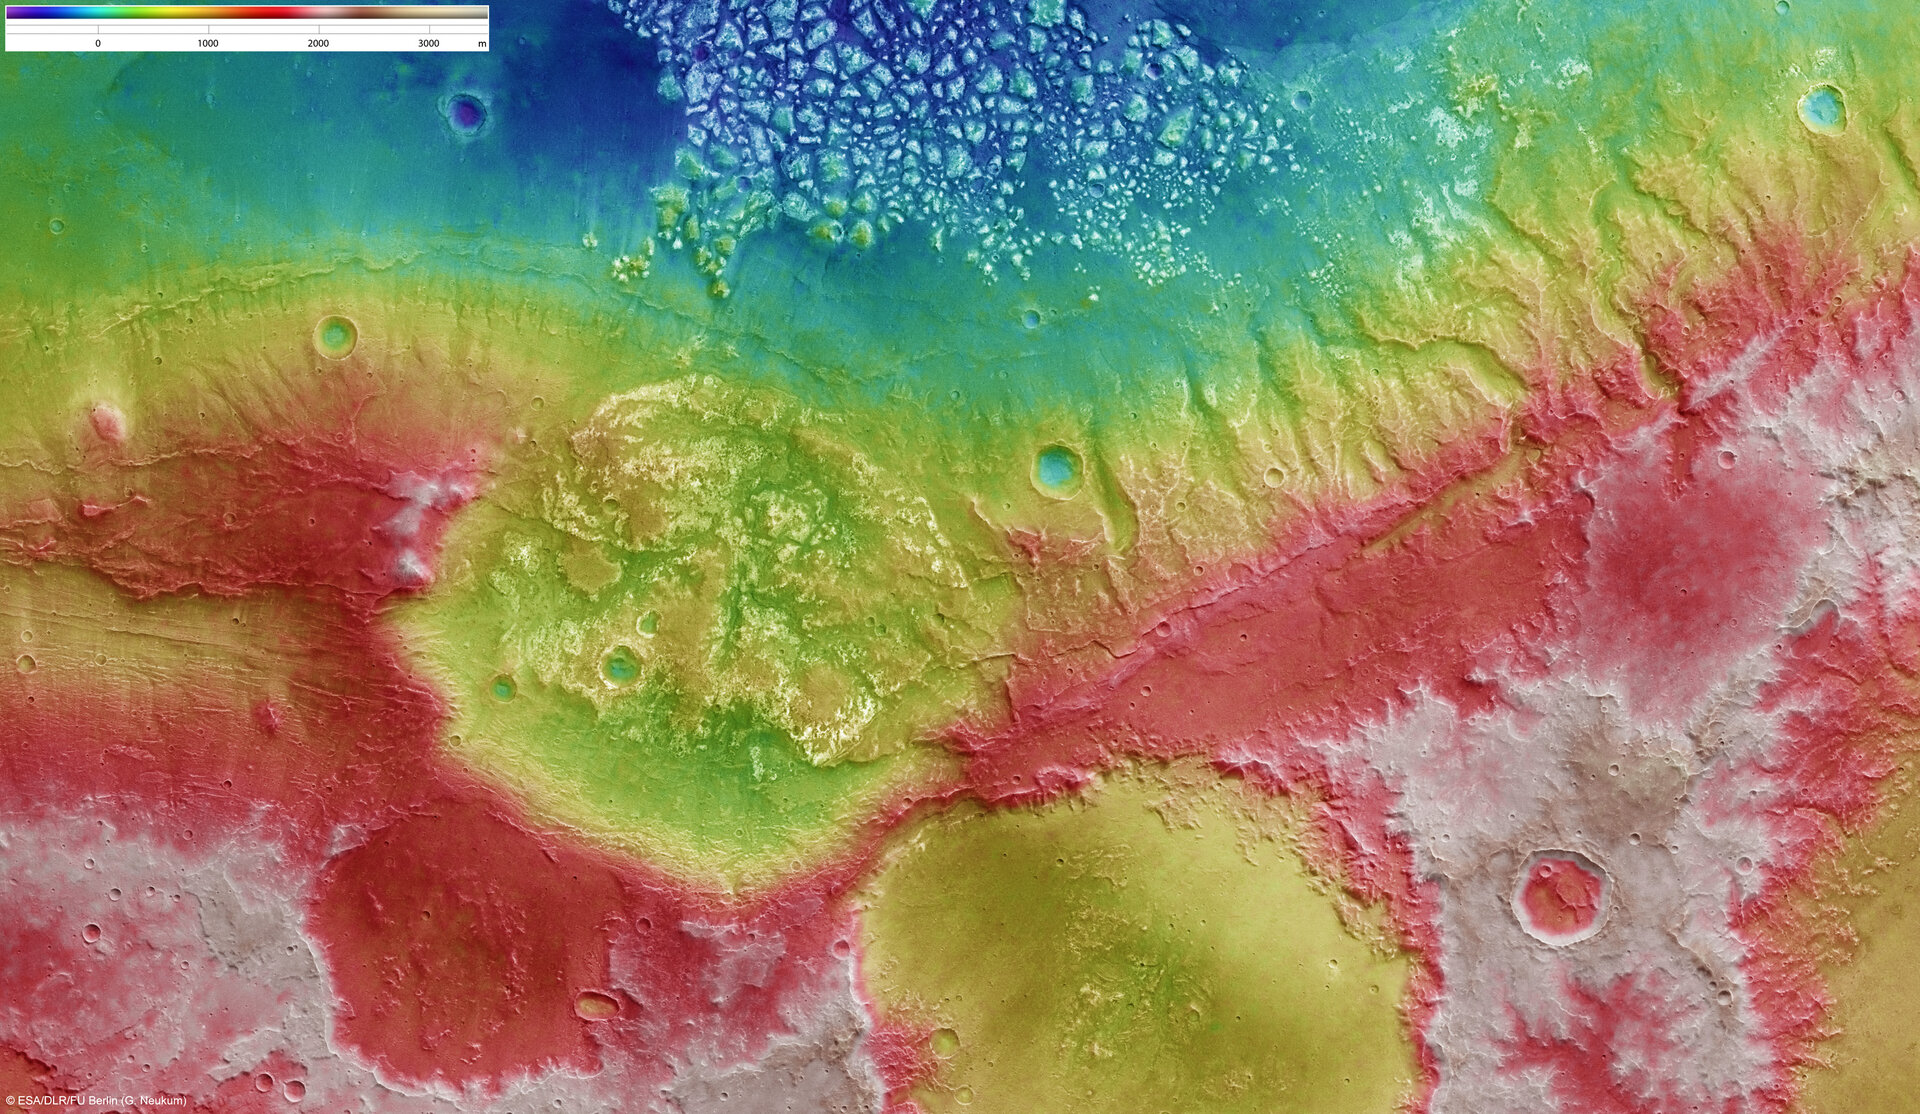 Elevation of the Magellan Crater region of Mars